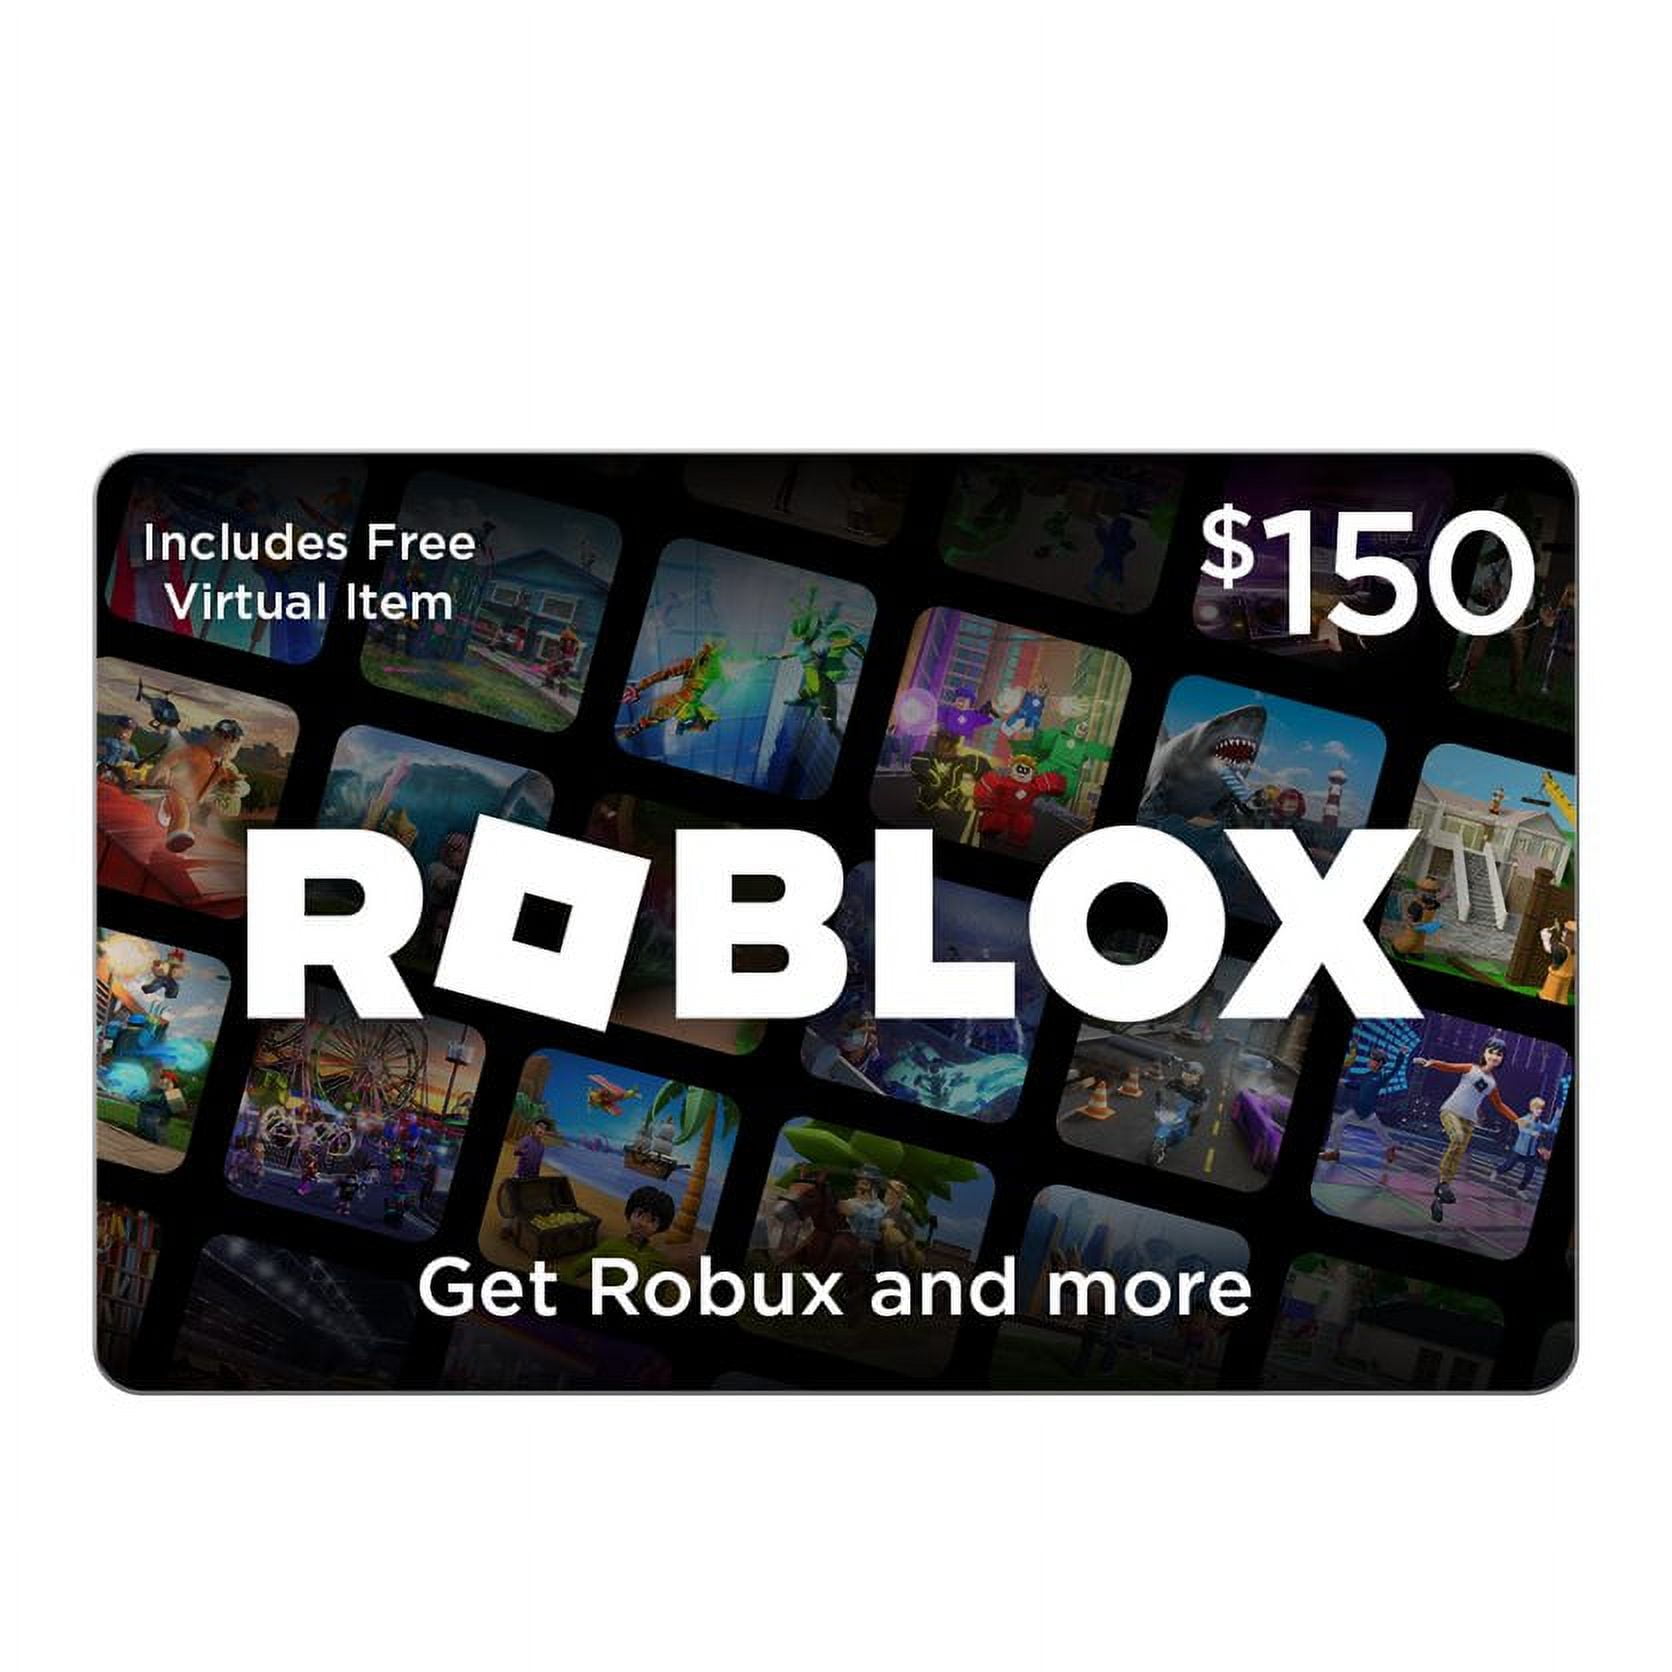 Roblox $25 eGift Card [Digital] + Exclusive 'The Hunt' Virtual